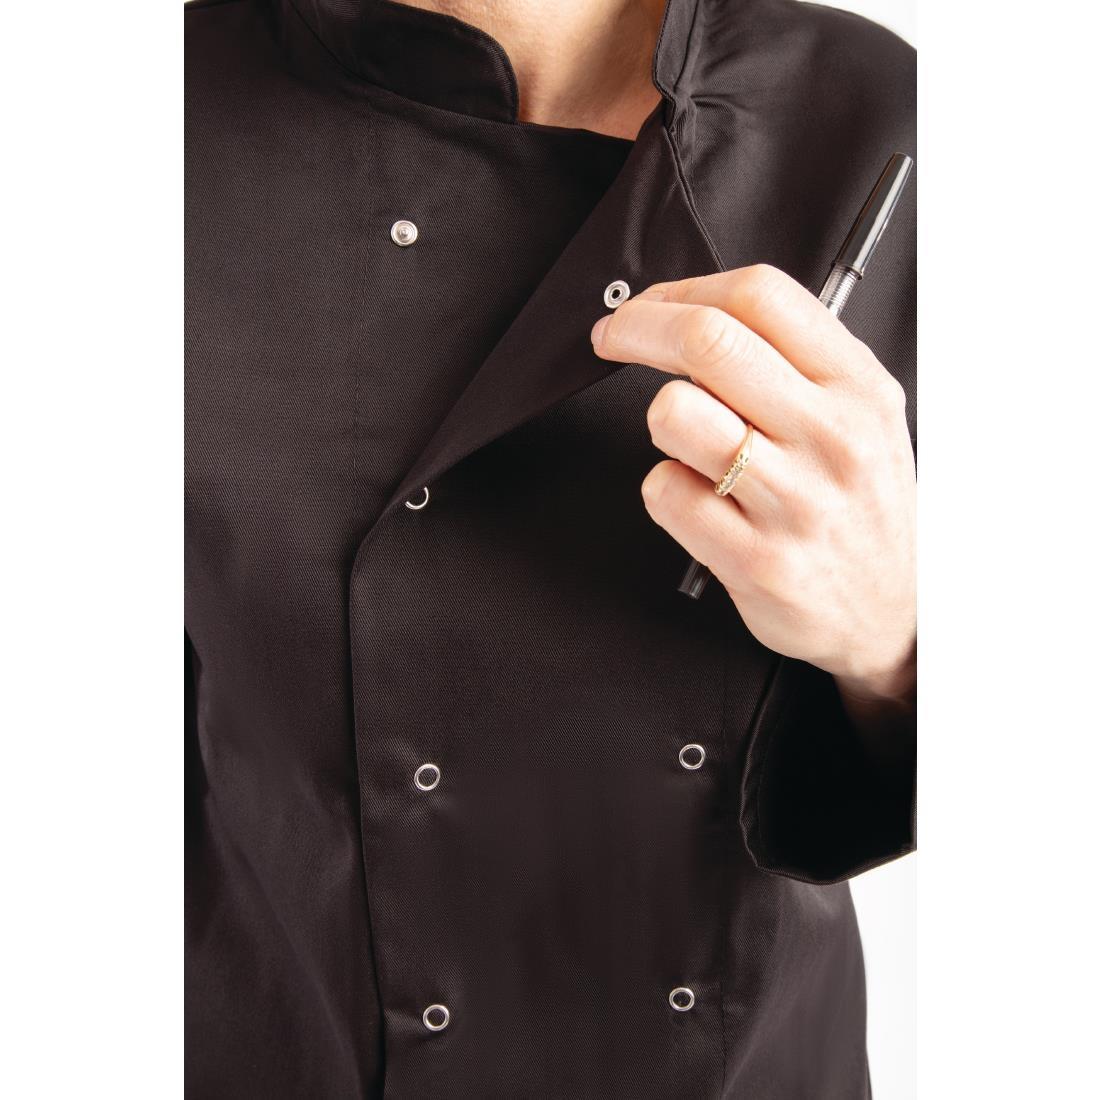 Whites Vegas Unisex Chefs Jacket Long Sleeve Black S - A438-S  - 8